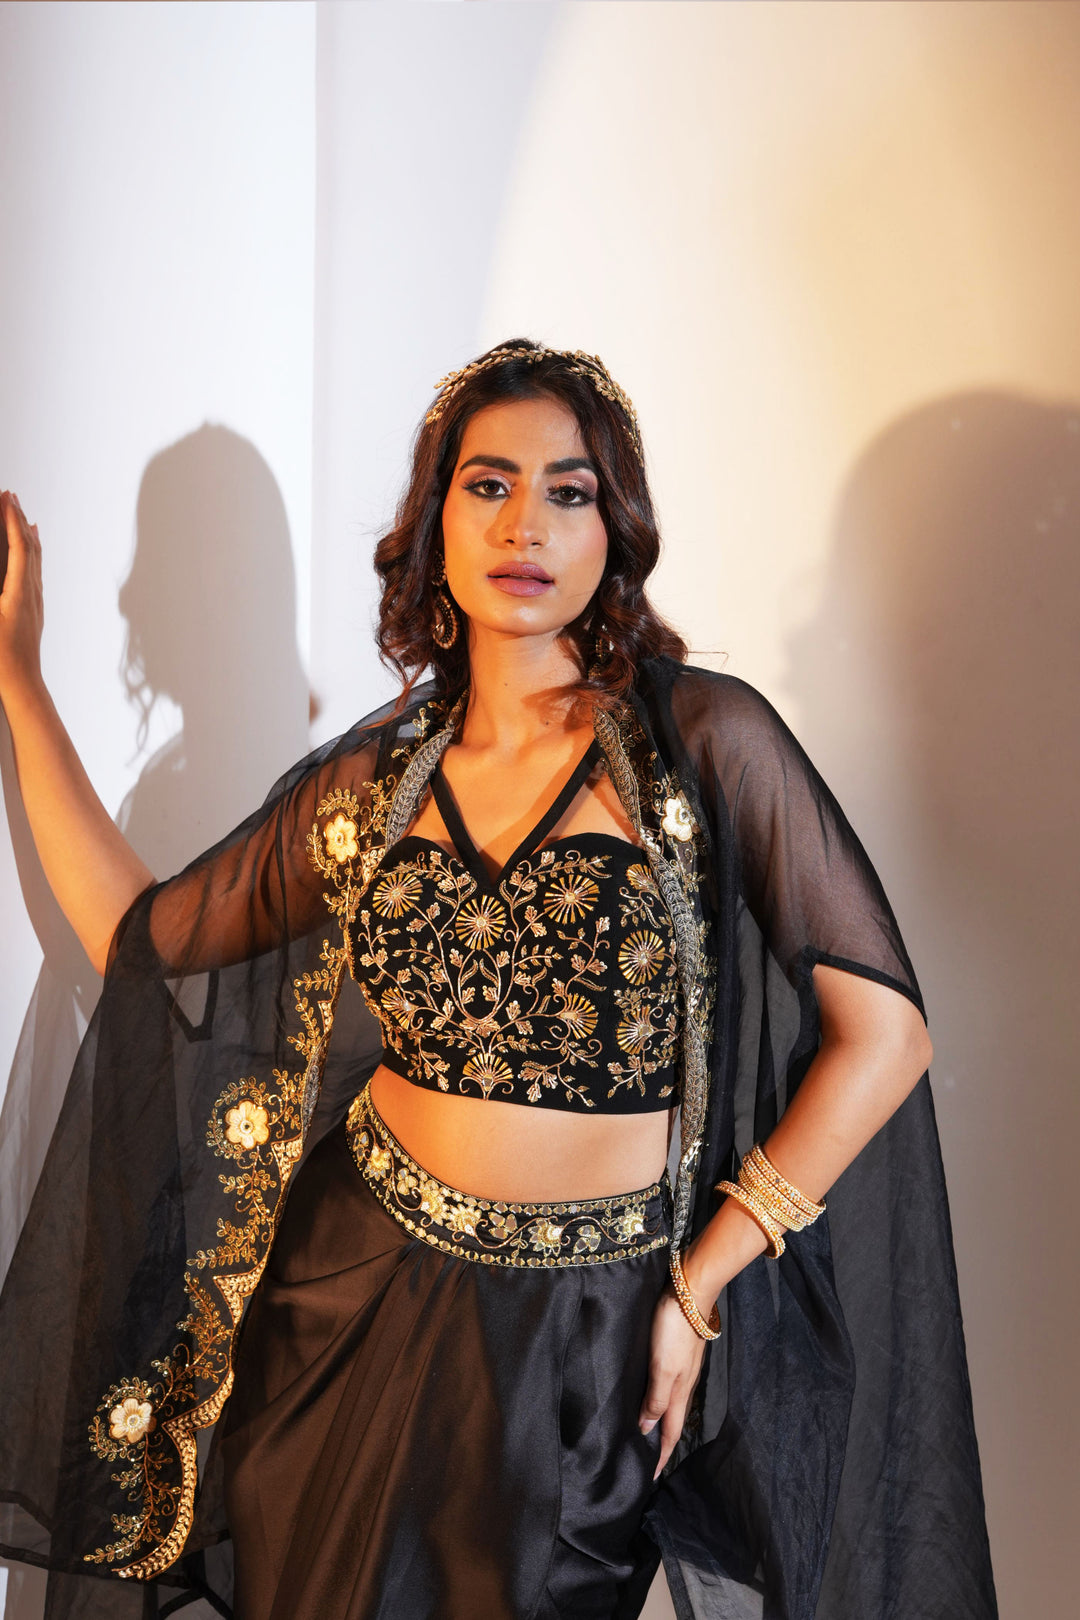 Rashika Sharma's Black and gold unique outfit - Rent